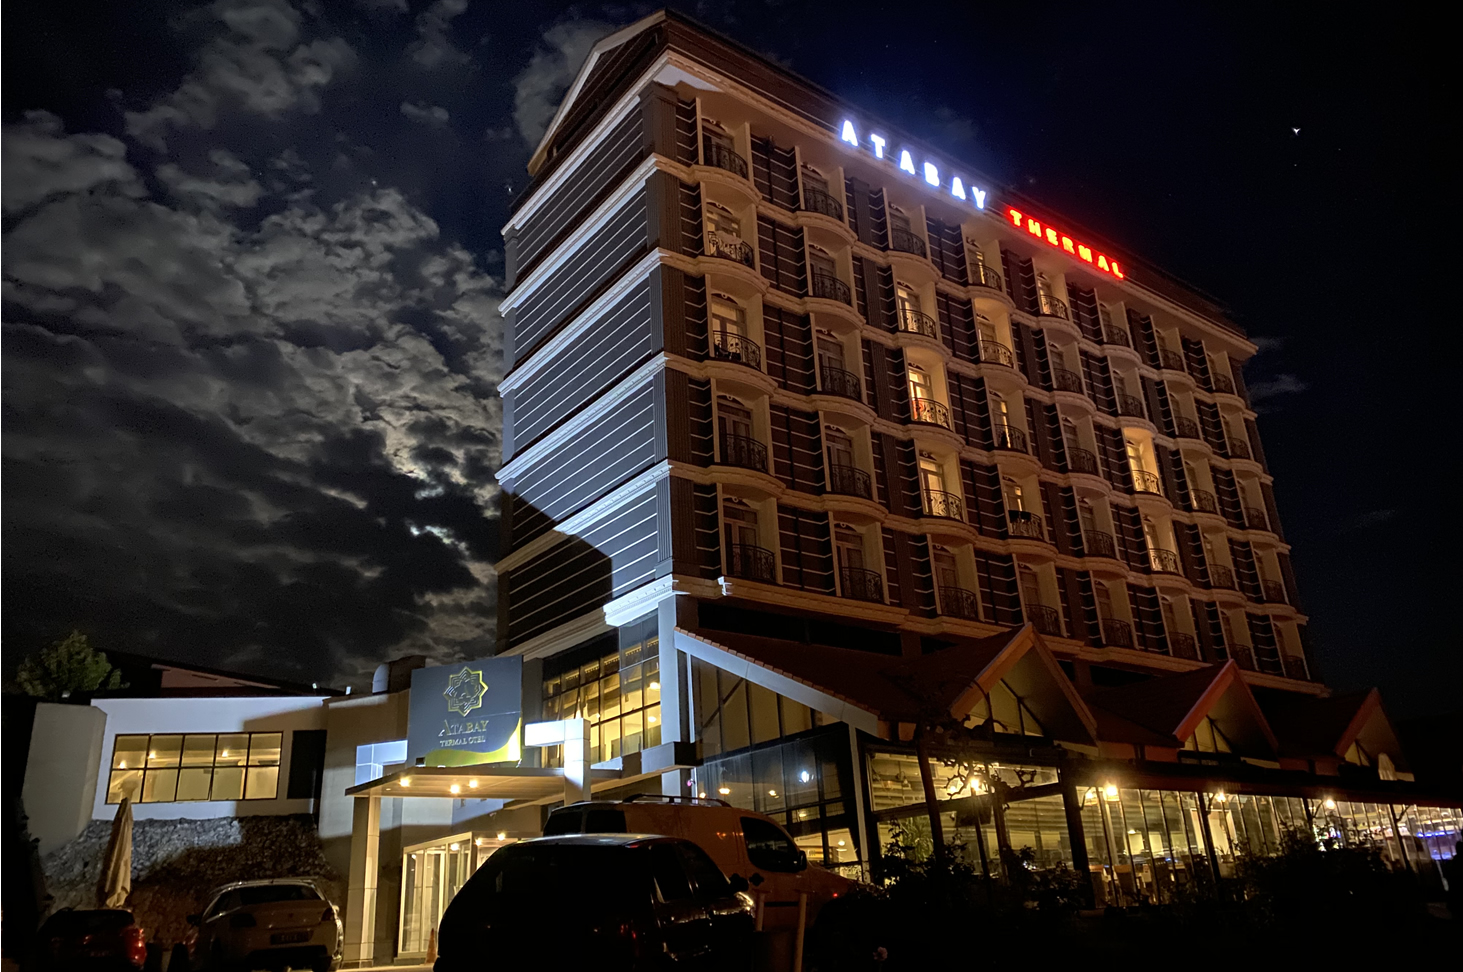 Atabay Termal Hotel Kozaklı